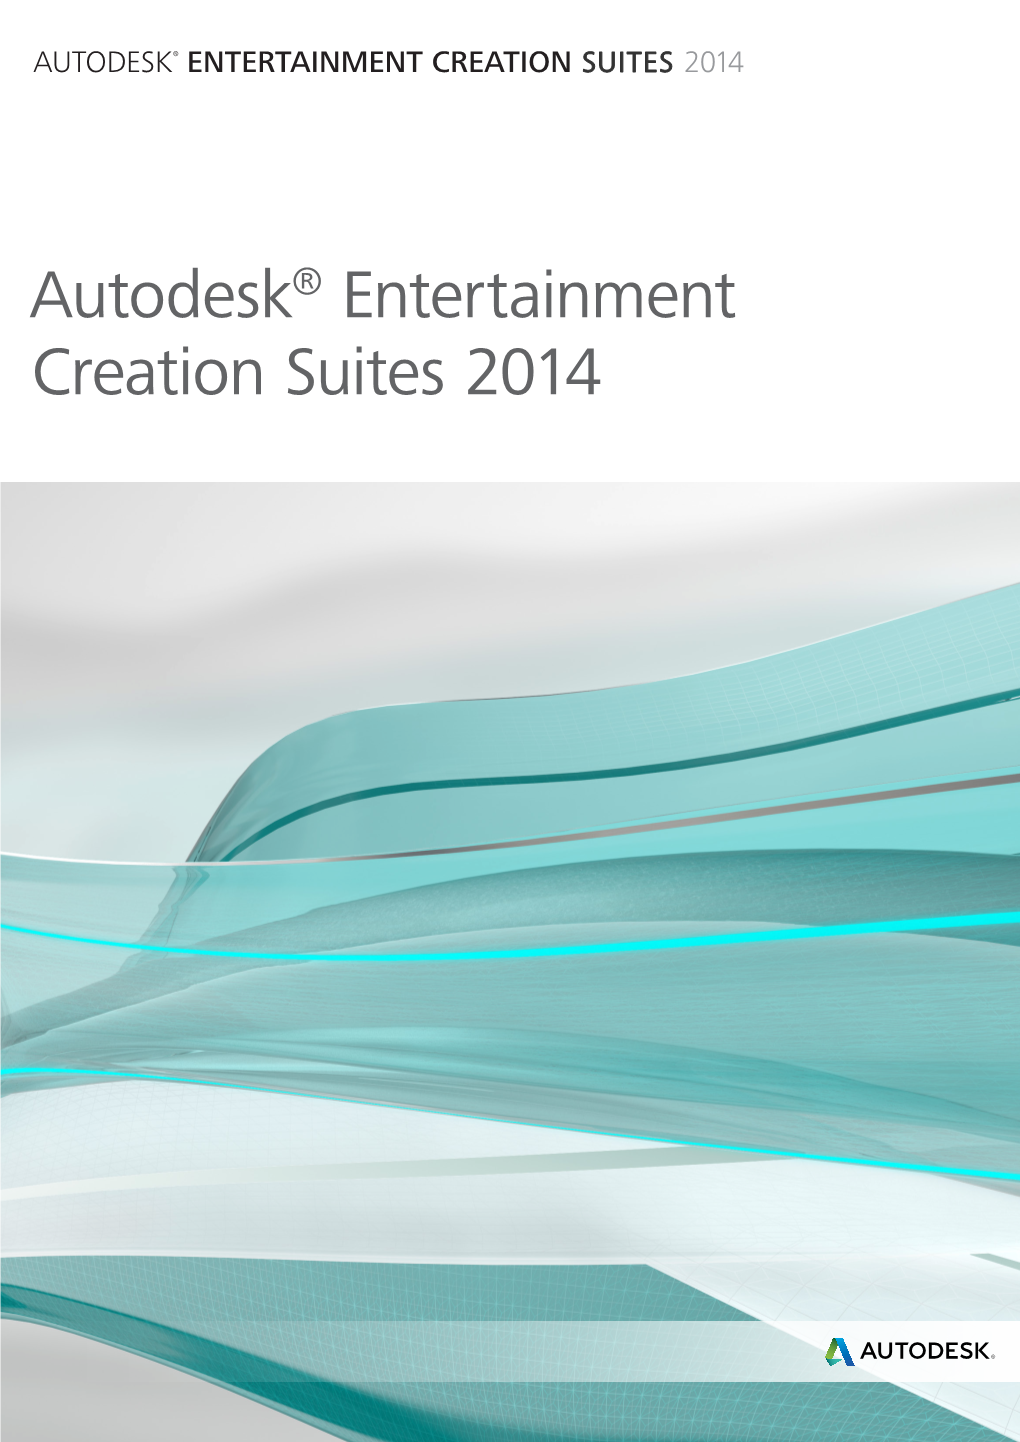 Autodesk® Entertainment Creation Suites 2014 Redefining Digital Entertainment Creation